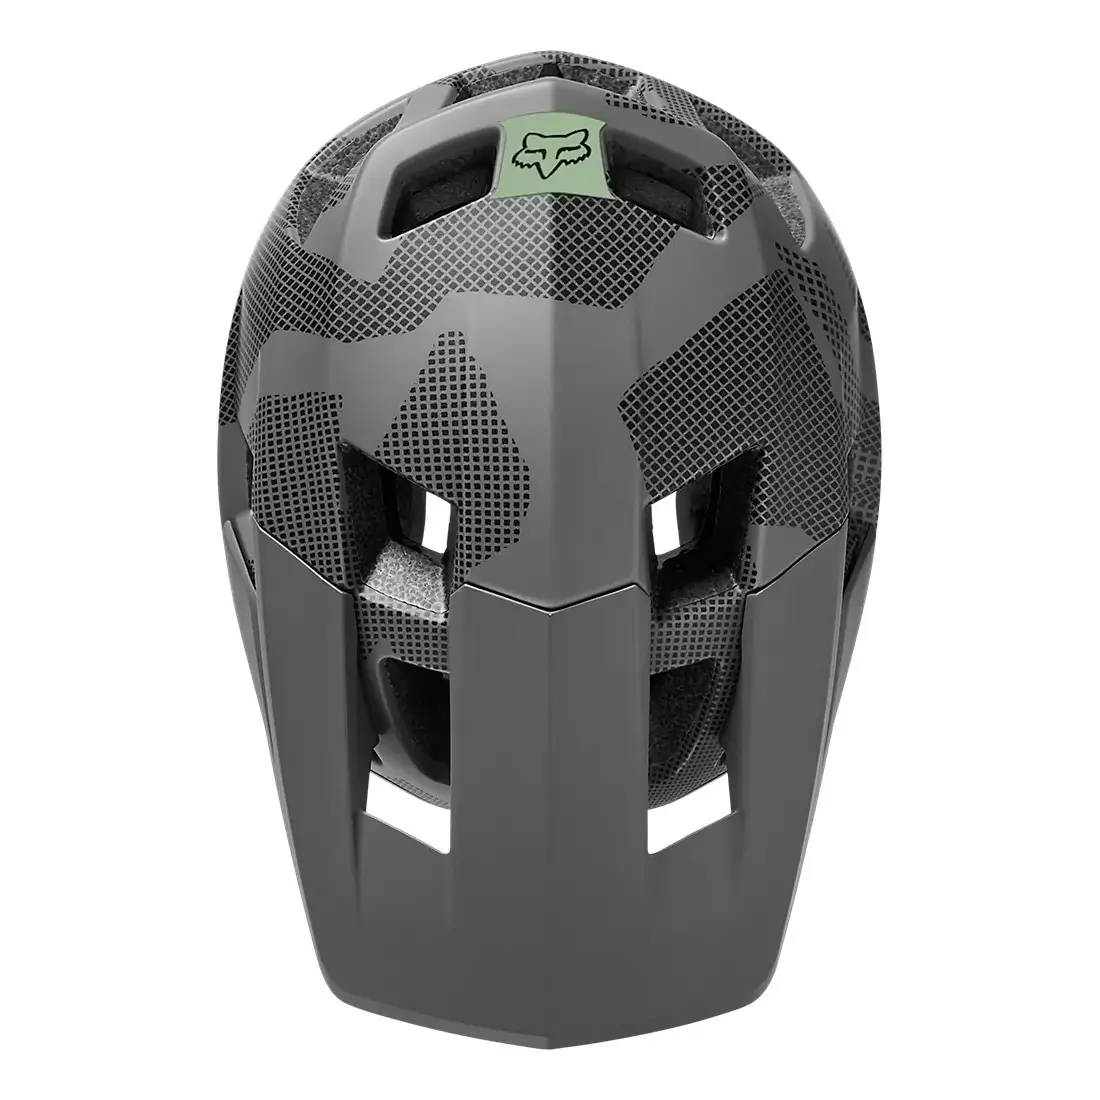 Dropframe Pro Camo Enduro Helmet Gray Camouflage Size M (54-56cm) #4